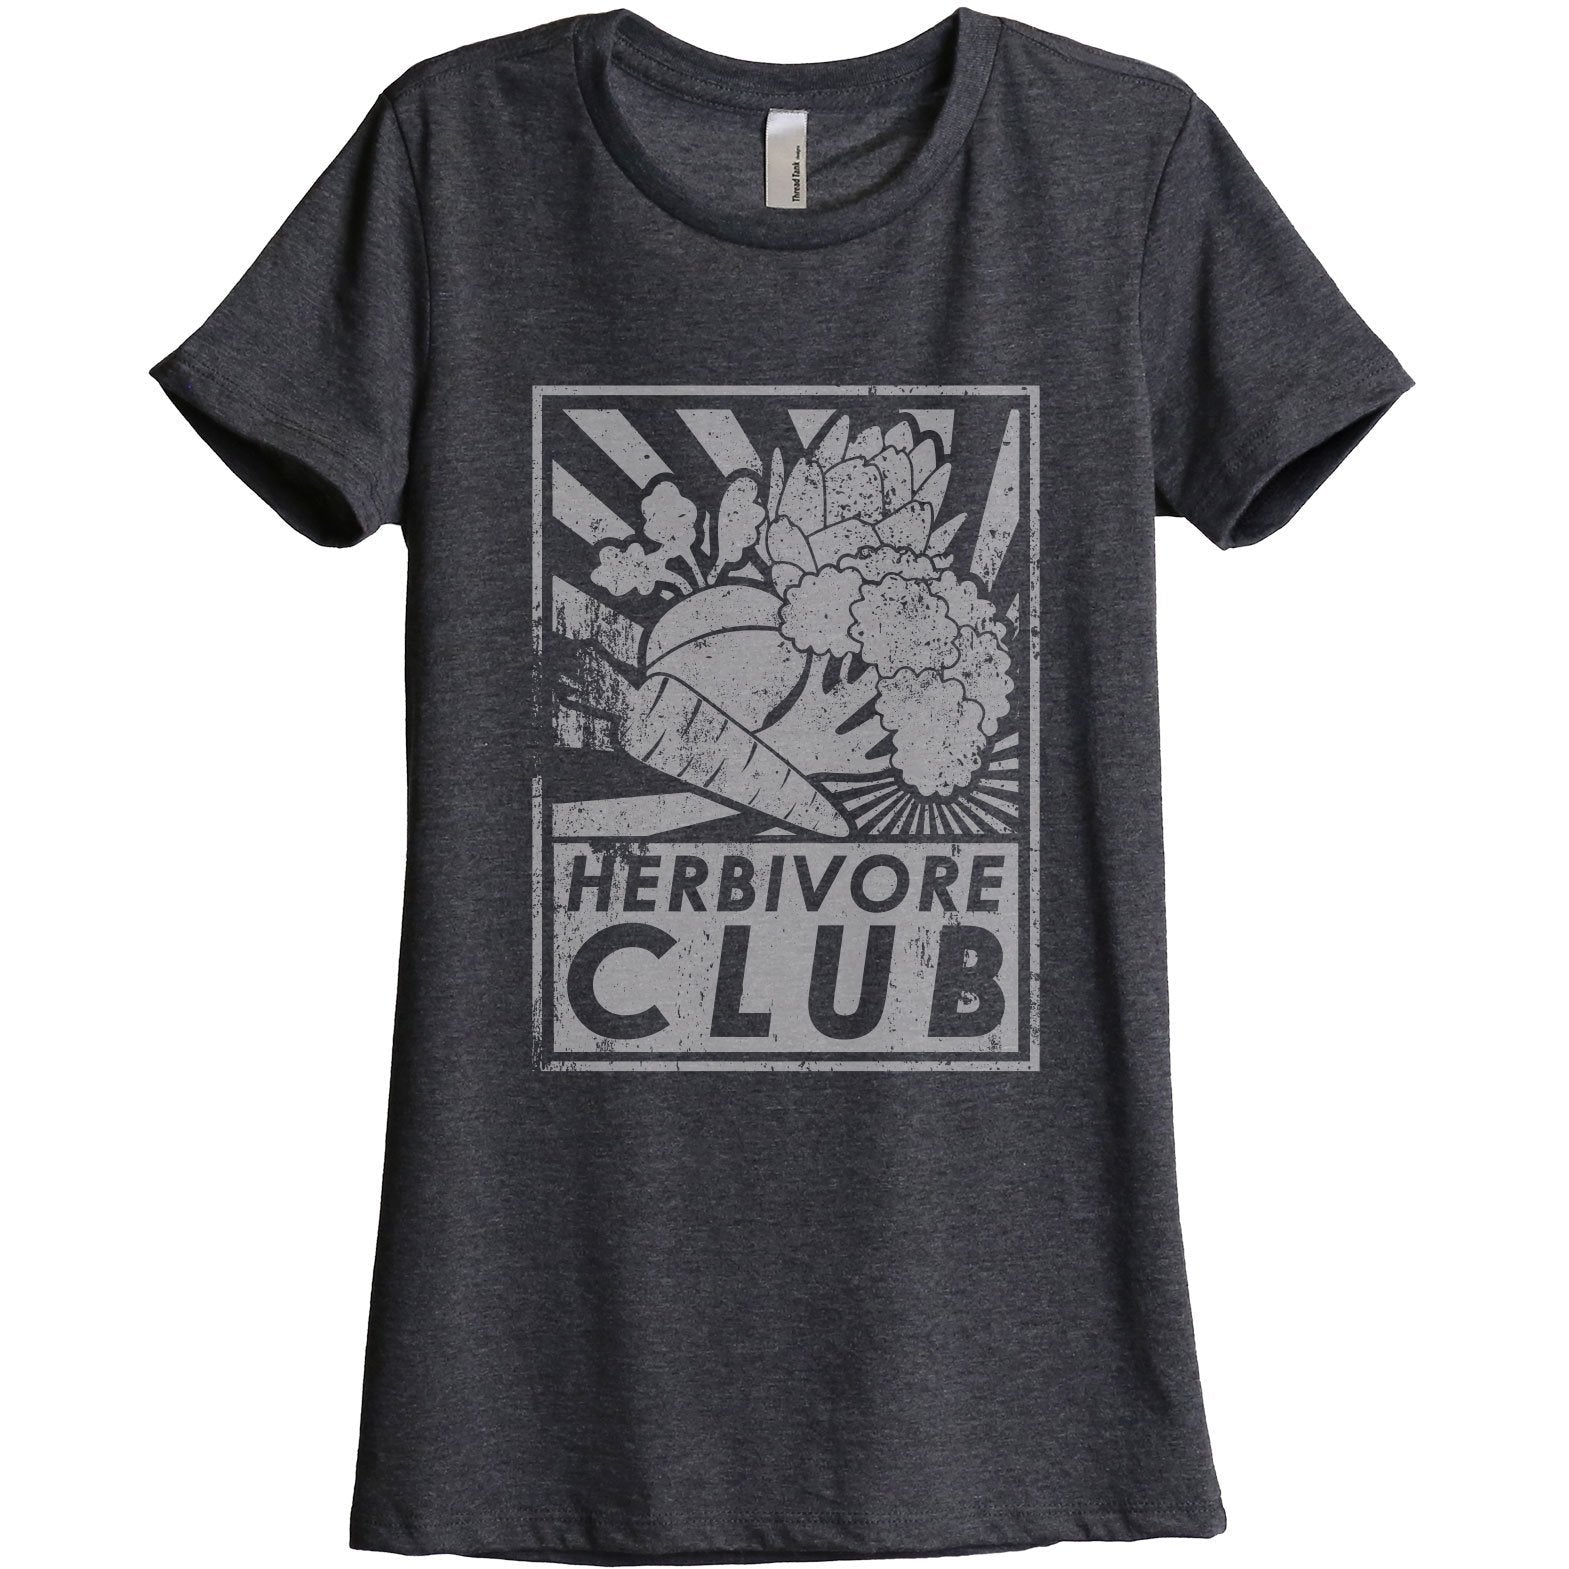 Herbivore Club Women's Relaxed Crewneck T-Shirt Top Tee Charcoal Grey
